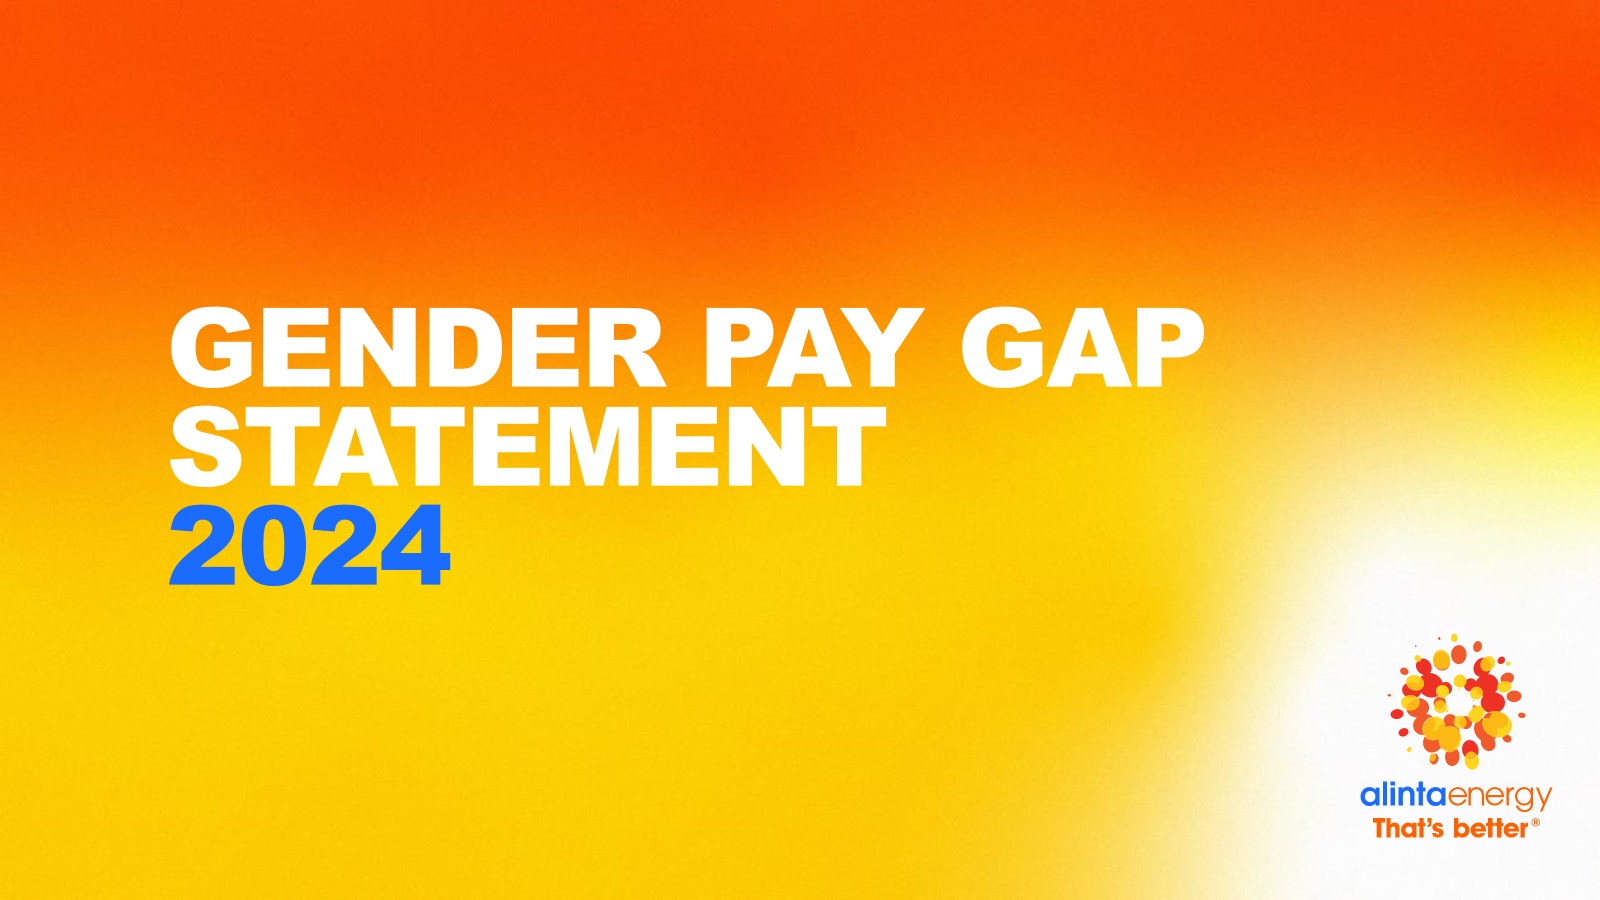 Addressing our gender pay gap